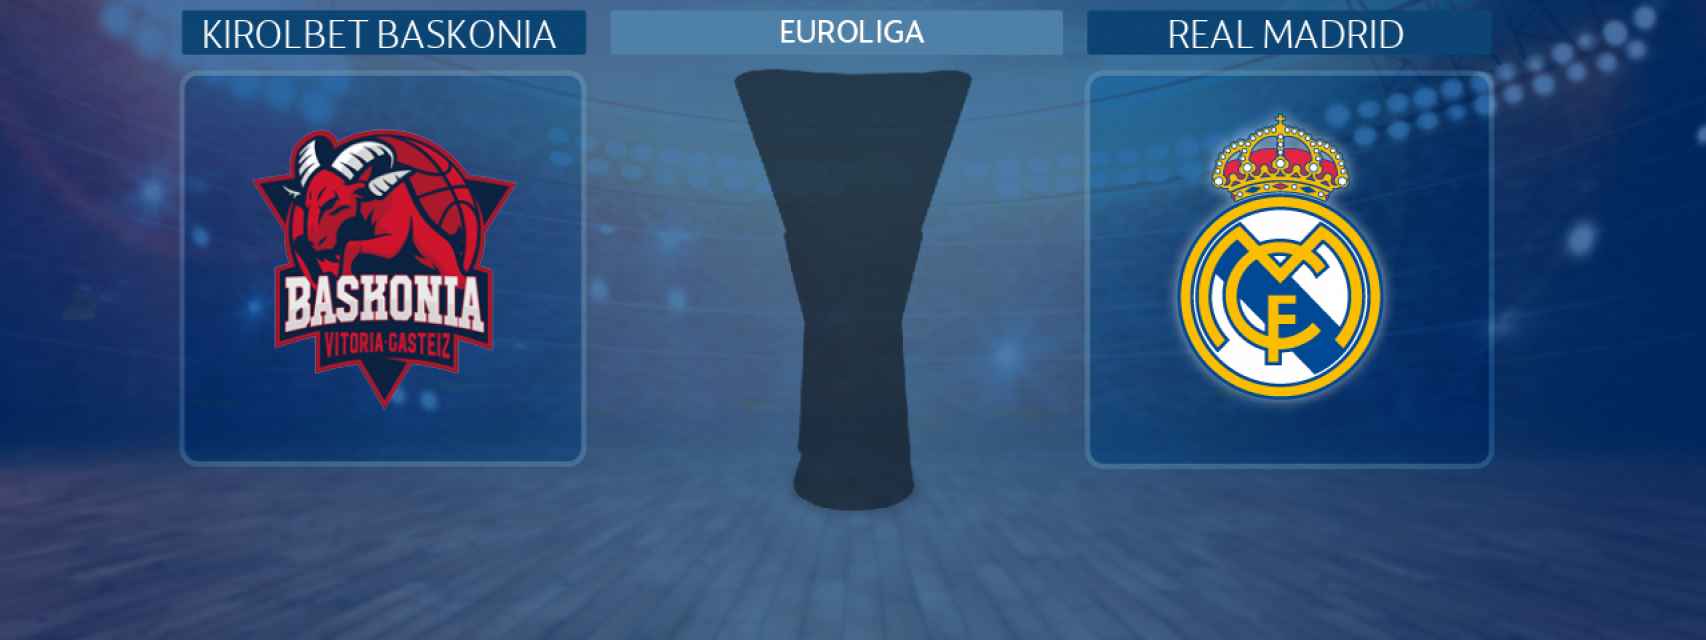 Kirolbet Baskonia - Real Madrid, partido de la Euroliga